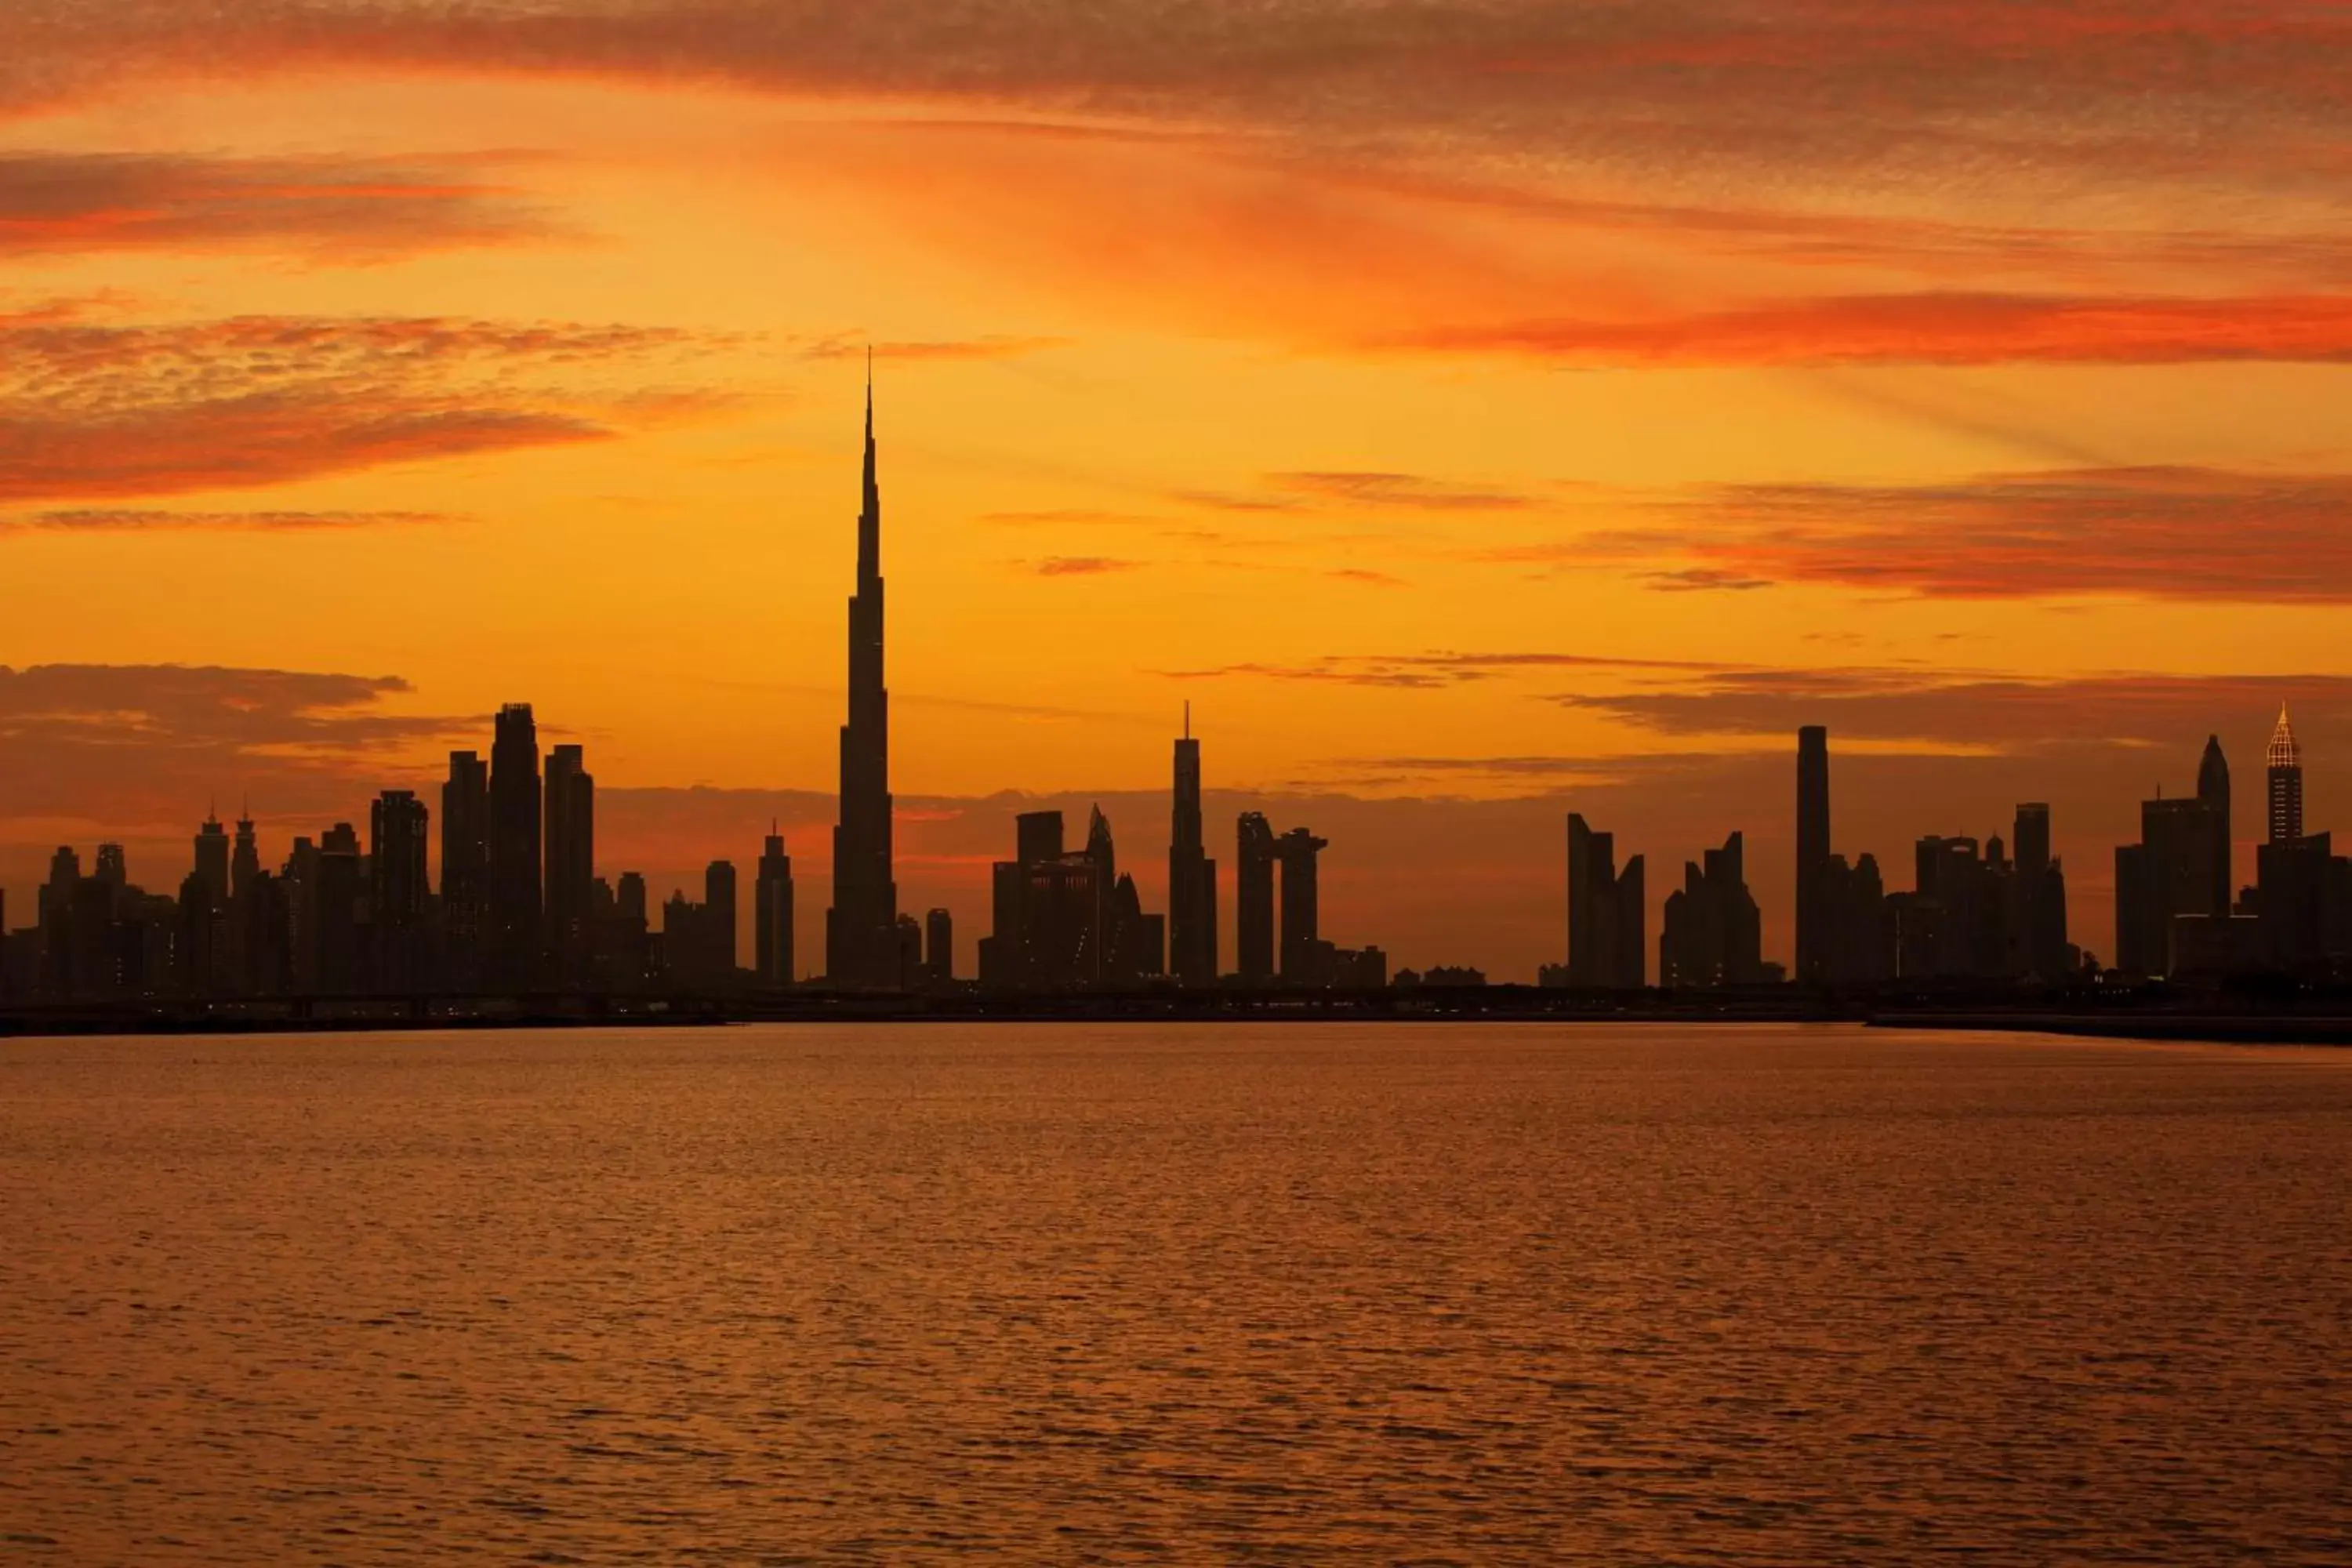 Location, Sunrise/Sunset in Hyatt Place Dubai Jumeirah